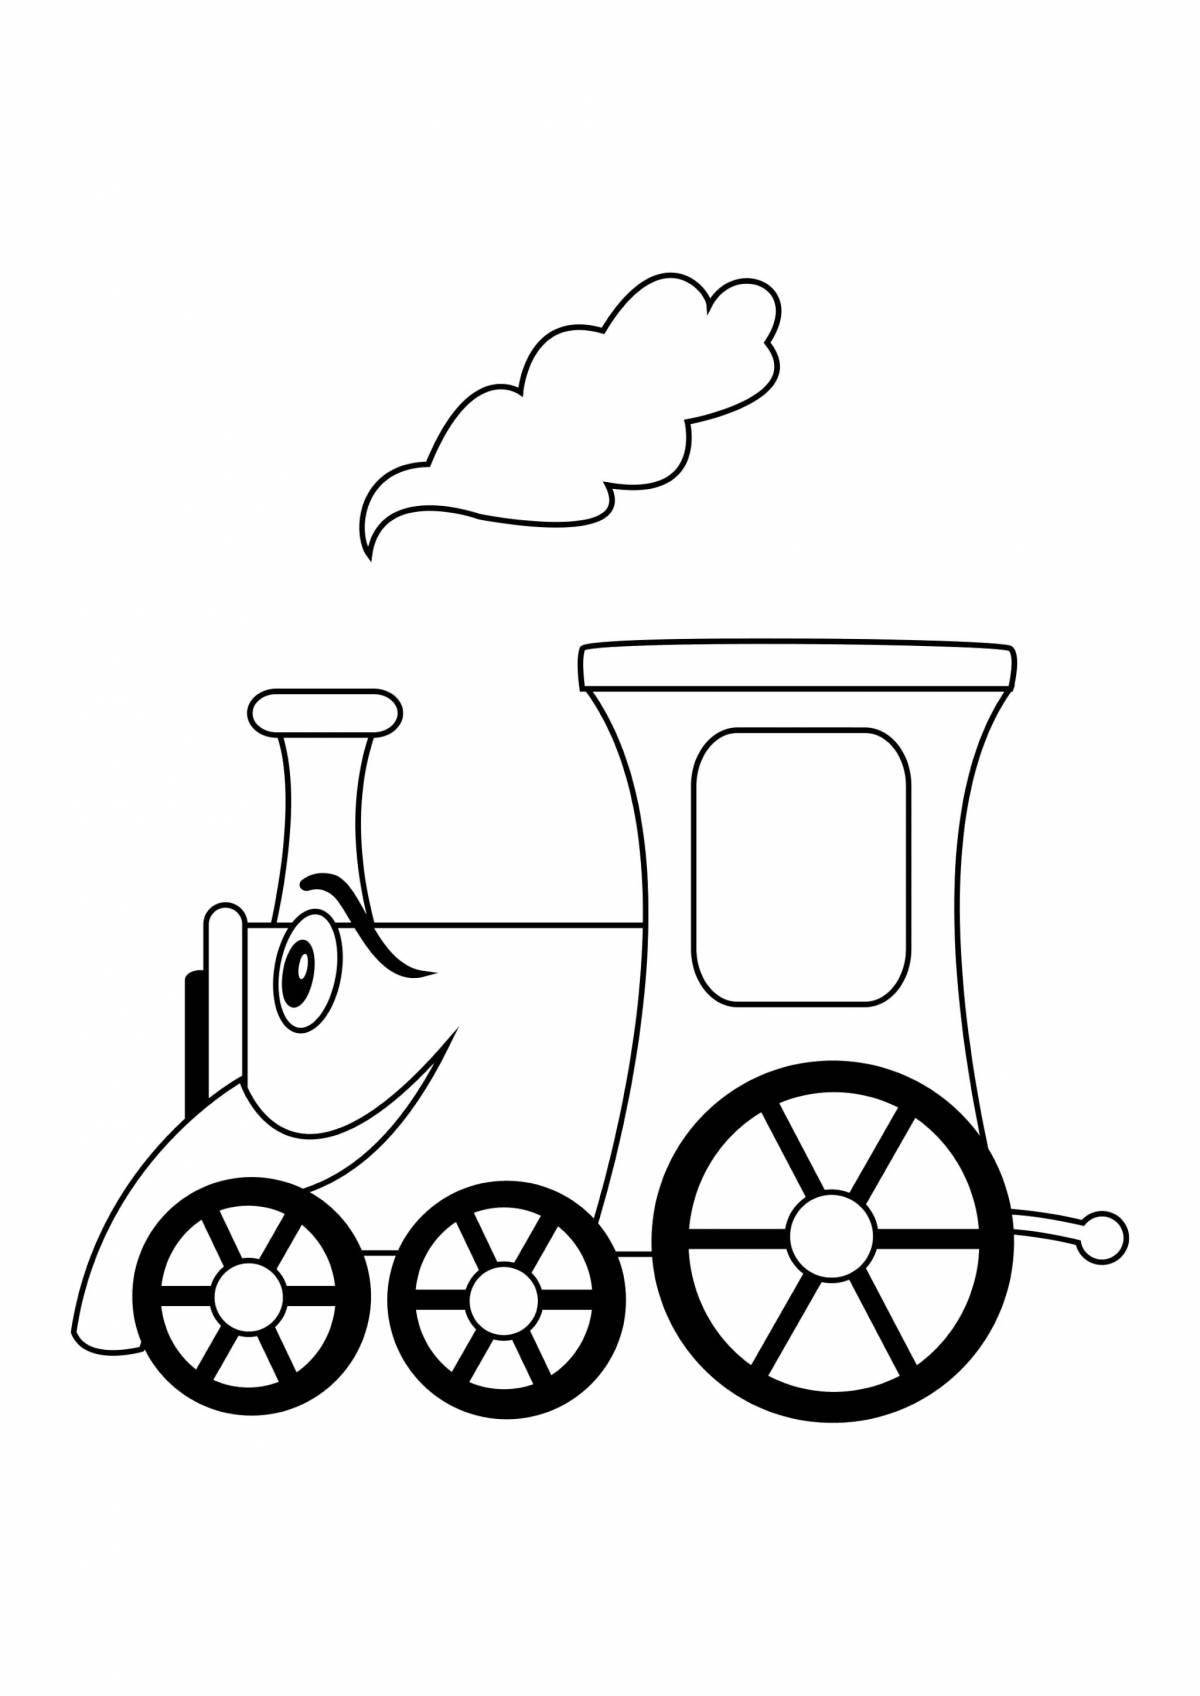 Bright coloring steam locomotive for children